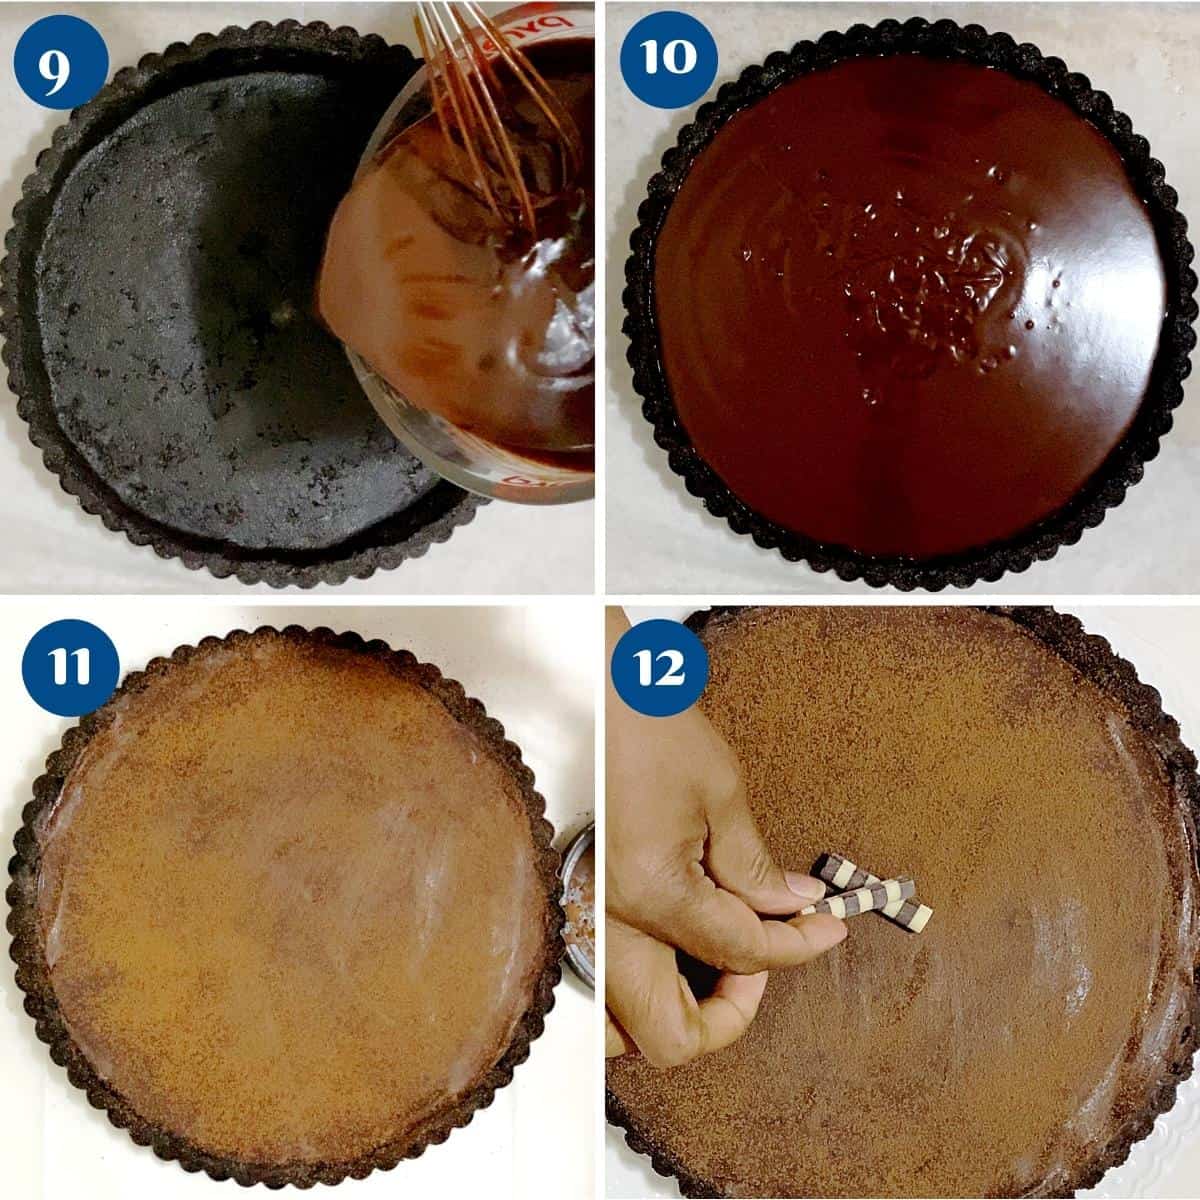 Progress pictures assembling the chocolate ganache tart.